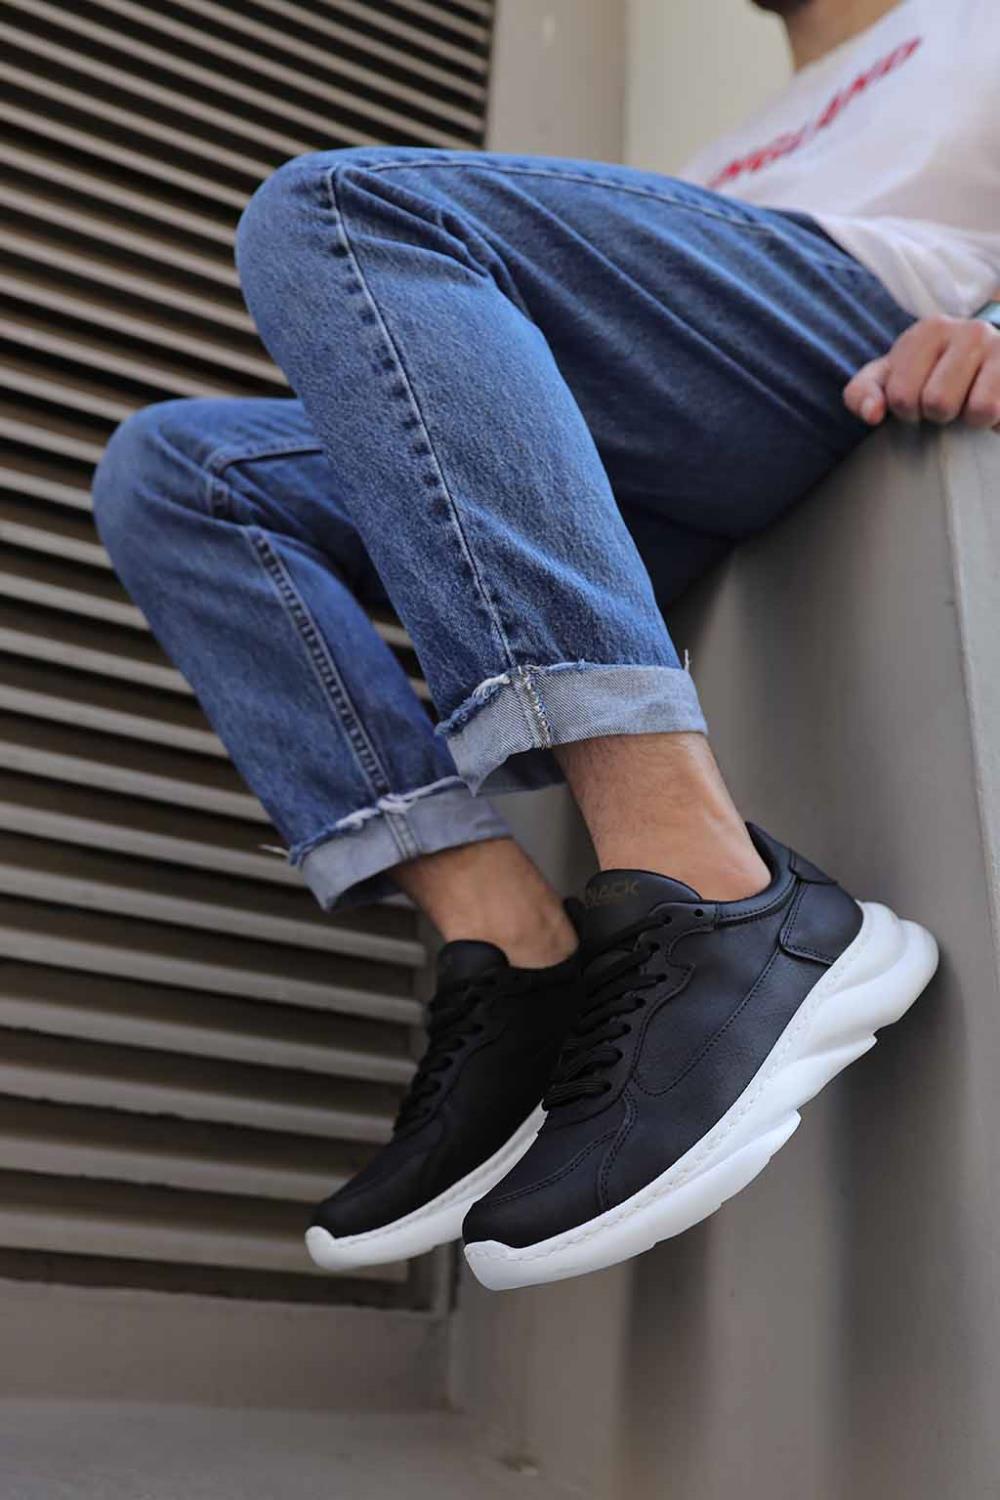 Knack Sneakers Ayakkabı 065 Siyah (Beyaz Taban) m9531